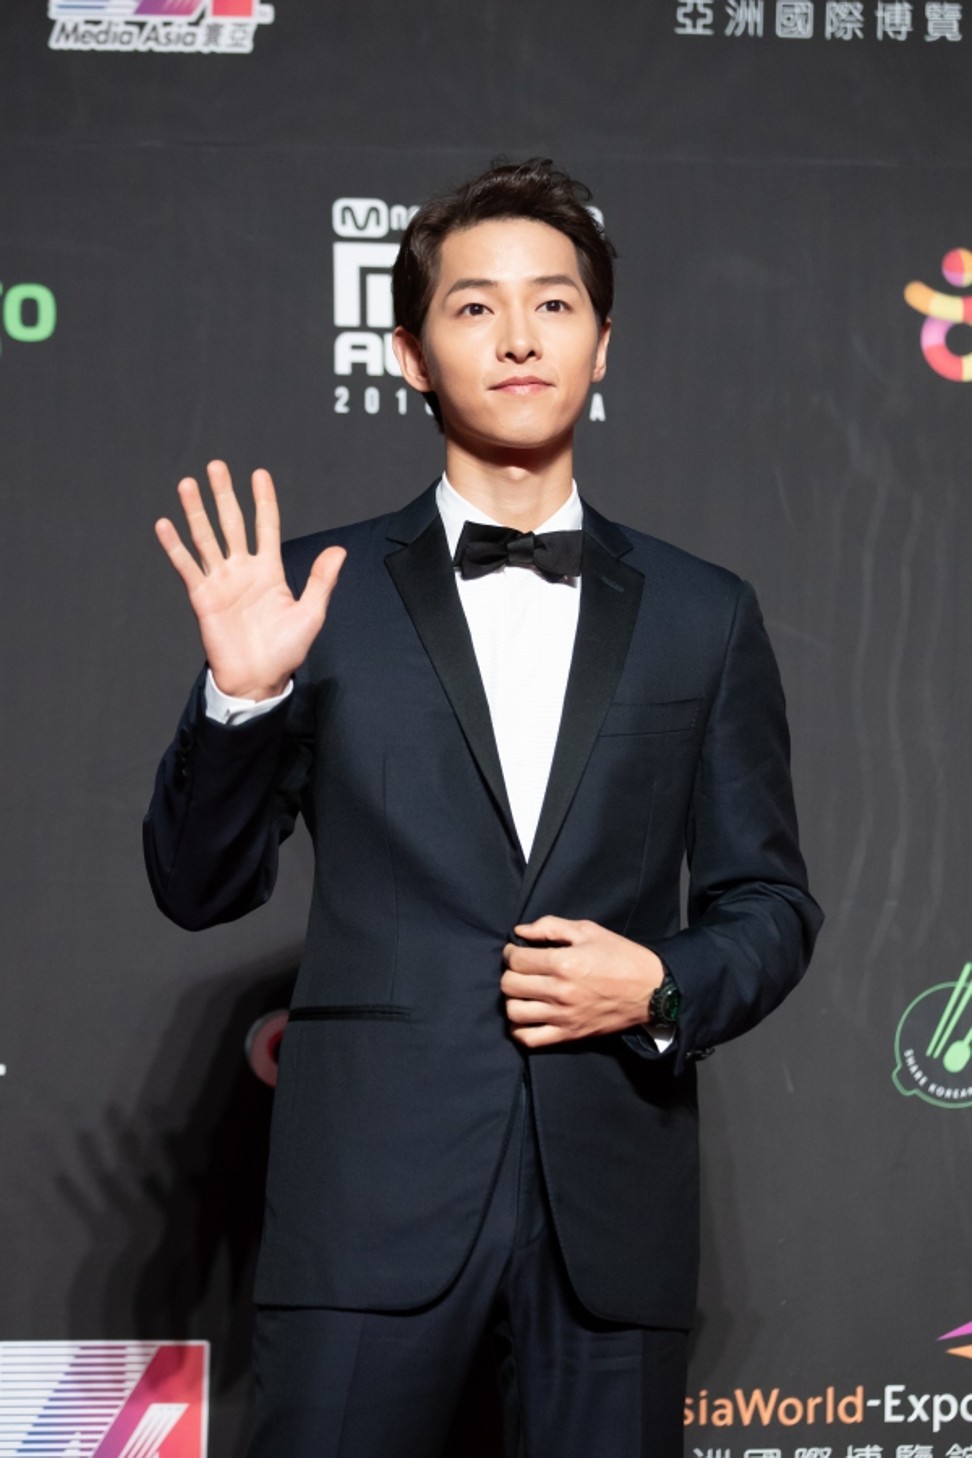 Song Joong-ki hosted the Mnet music awards in Hong Kong.